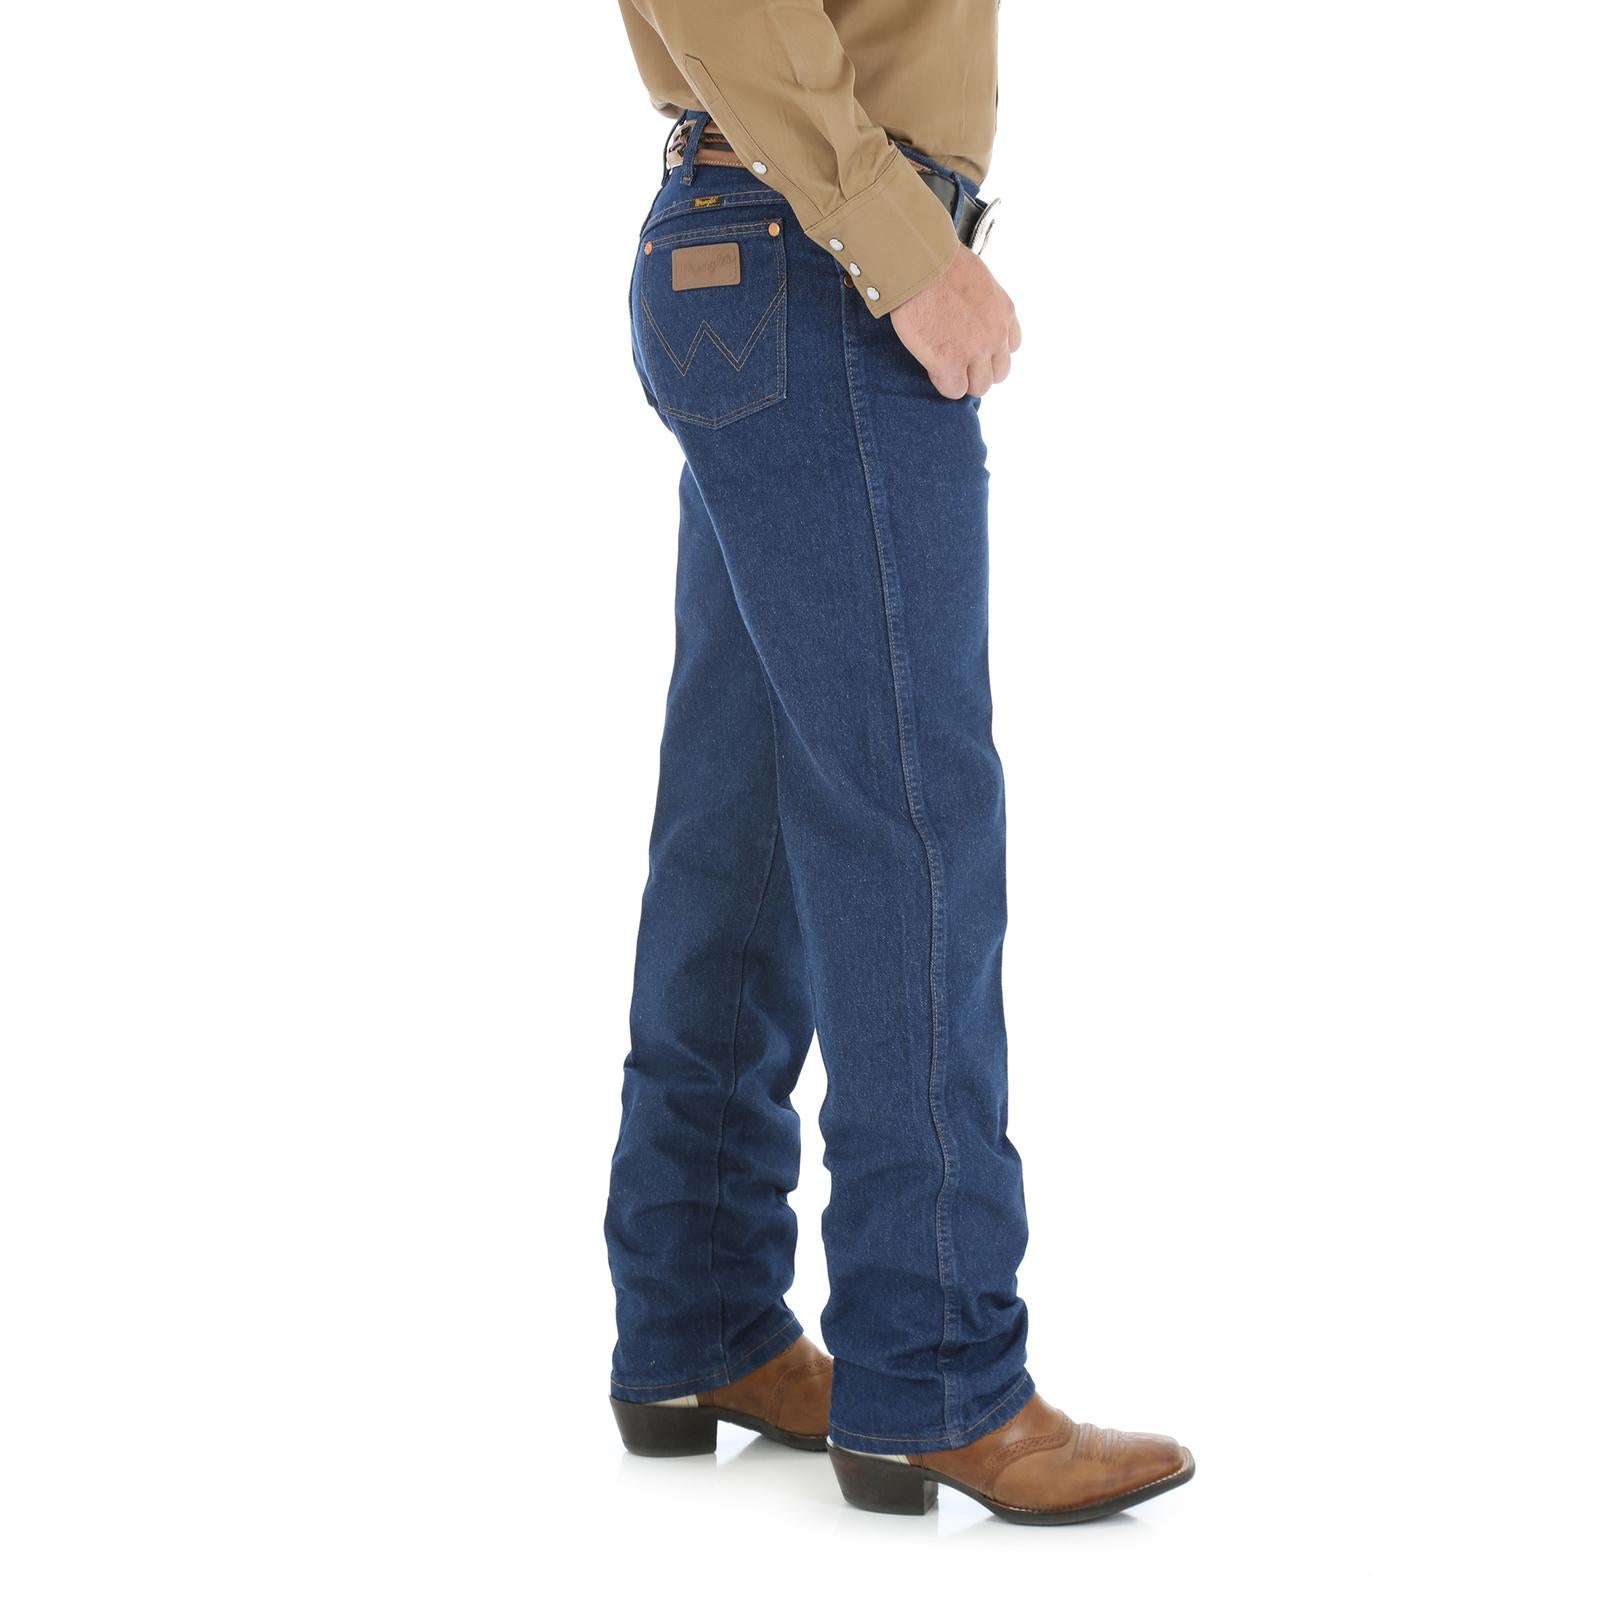 Wrangler ProRodeo Original Cowboy Cut Jeans Prewashed Indigo - 13MWZPW - Nate's Western Wear